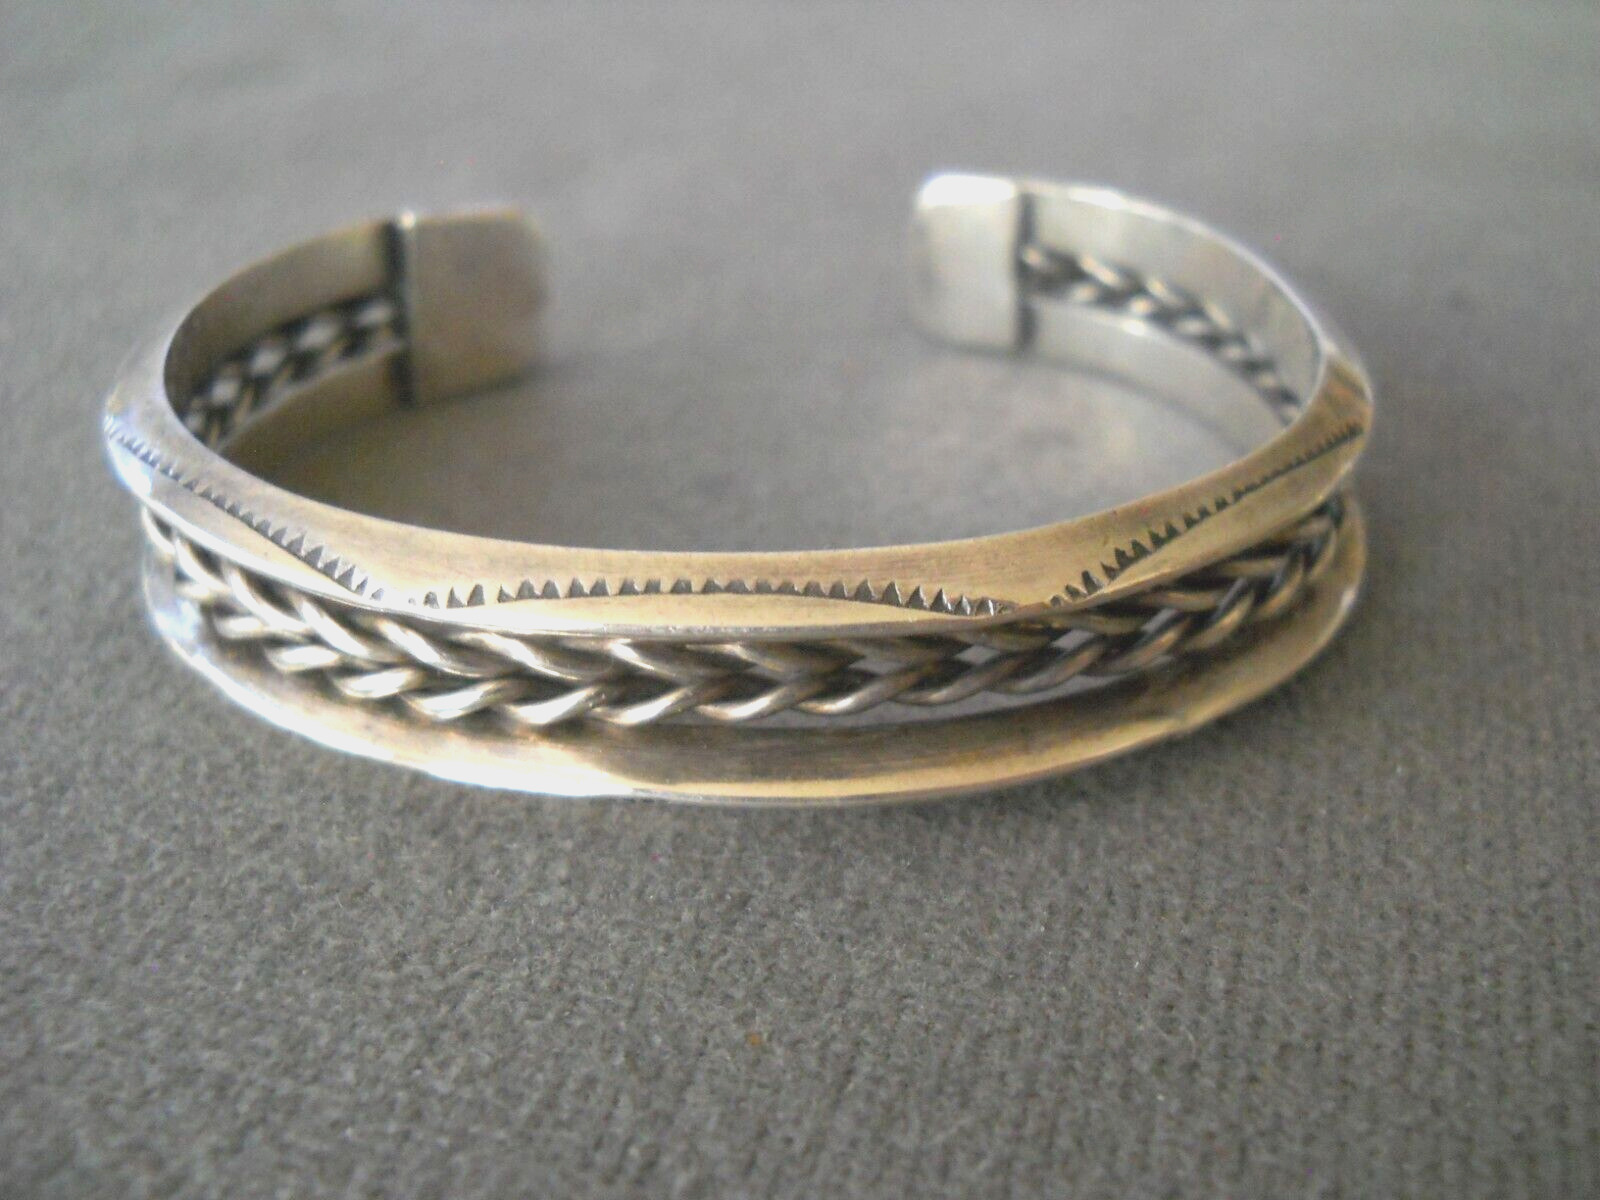 Southwestern Native American Navajo Double Rope Sterling Silver Cuff Bracelet